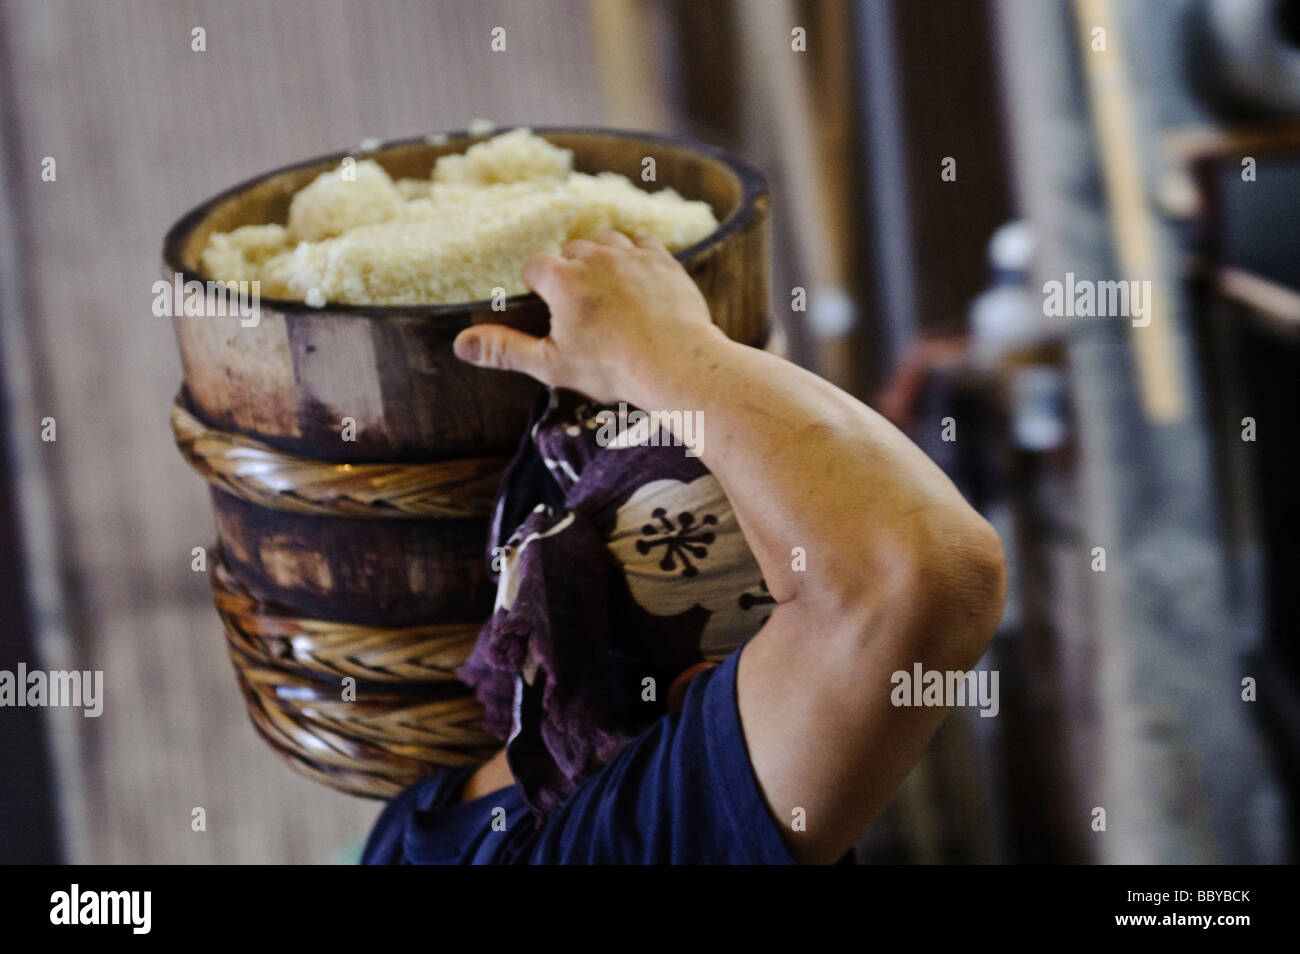 A worker carries a tub of steamed rice. Terada Honke sake brewery, Kozaki, Chiba, Japan, 15 June 2009. Stock Photo